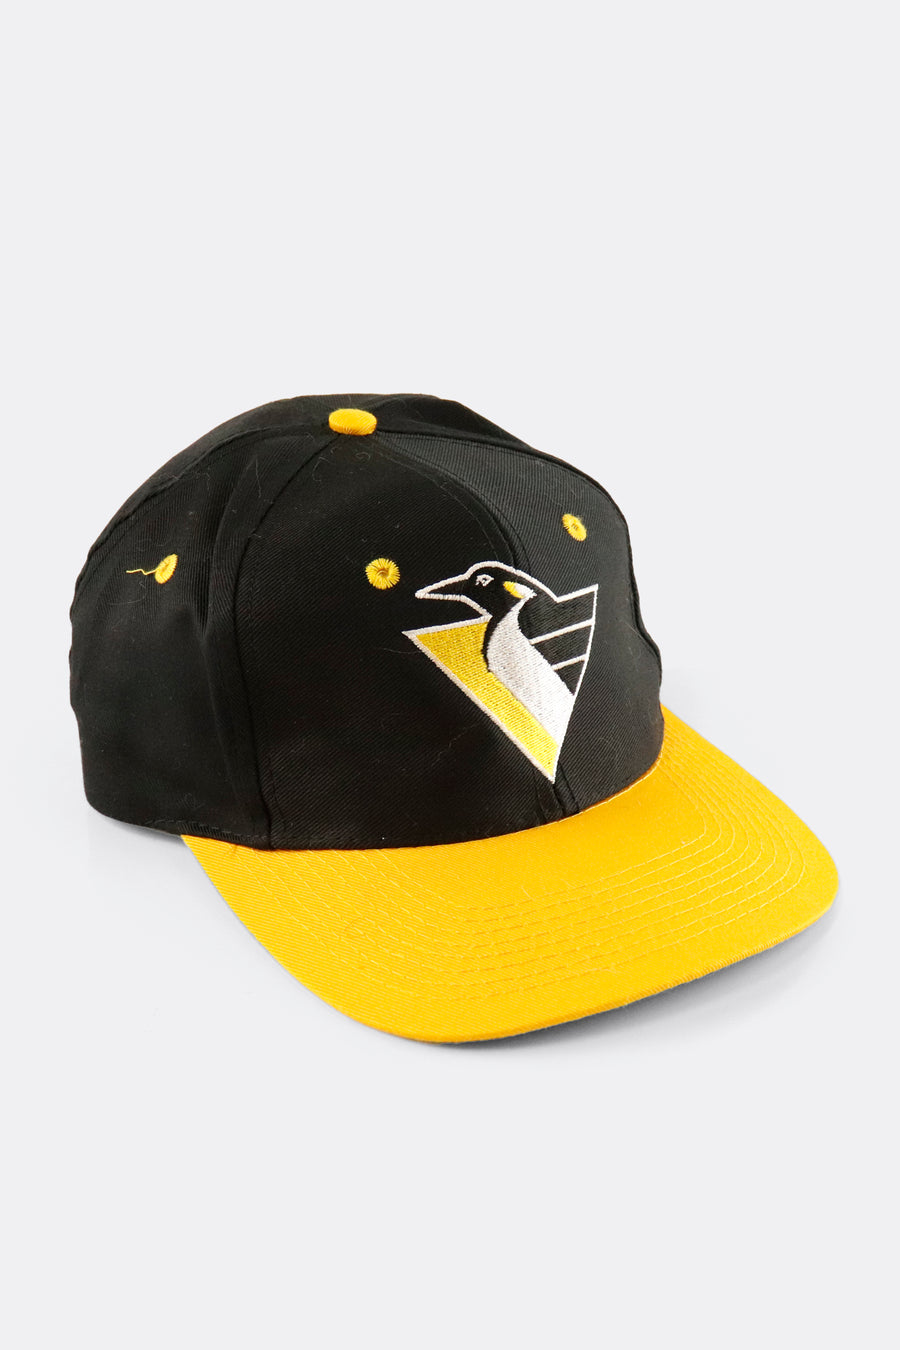 Vintage NHL Pittsburgh Pengiuns Embroidered Snapback Hat